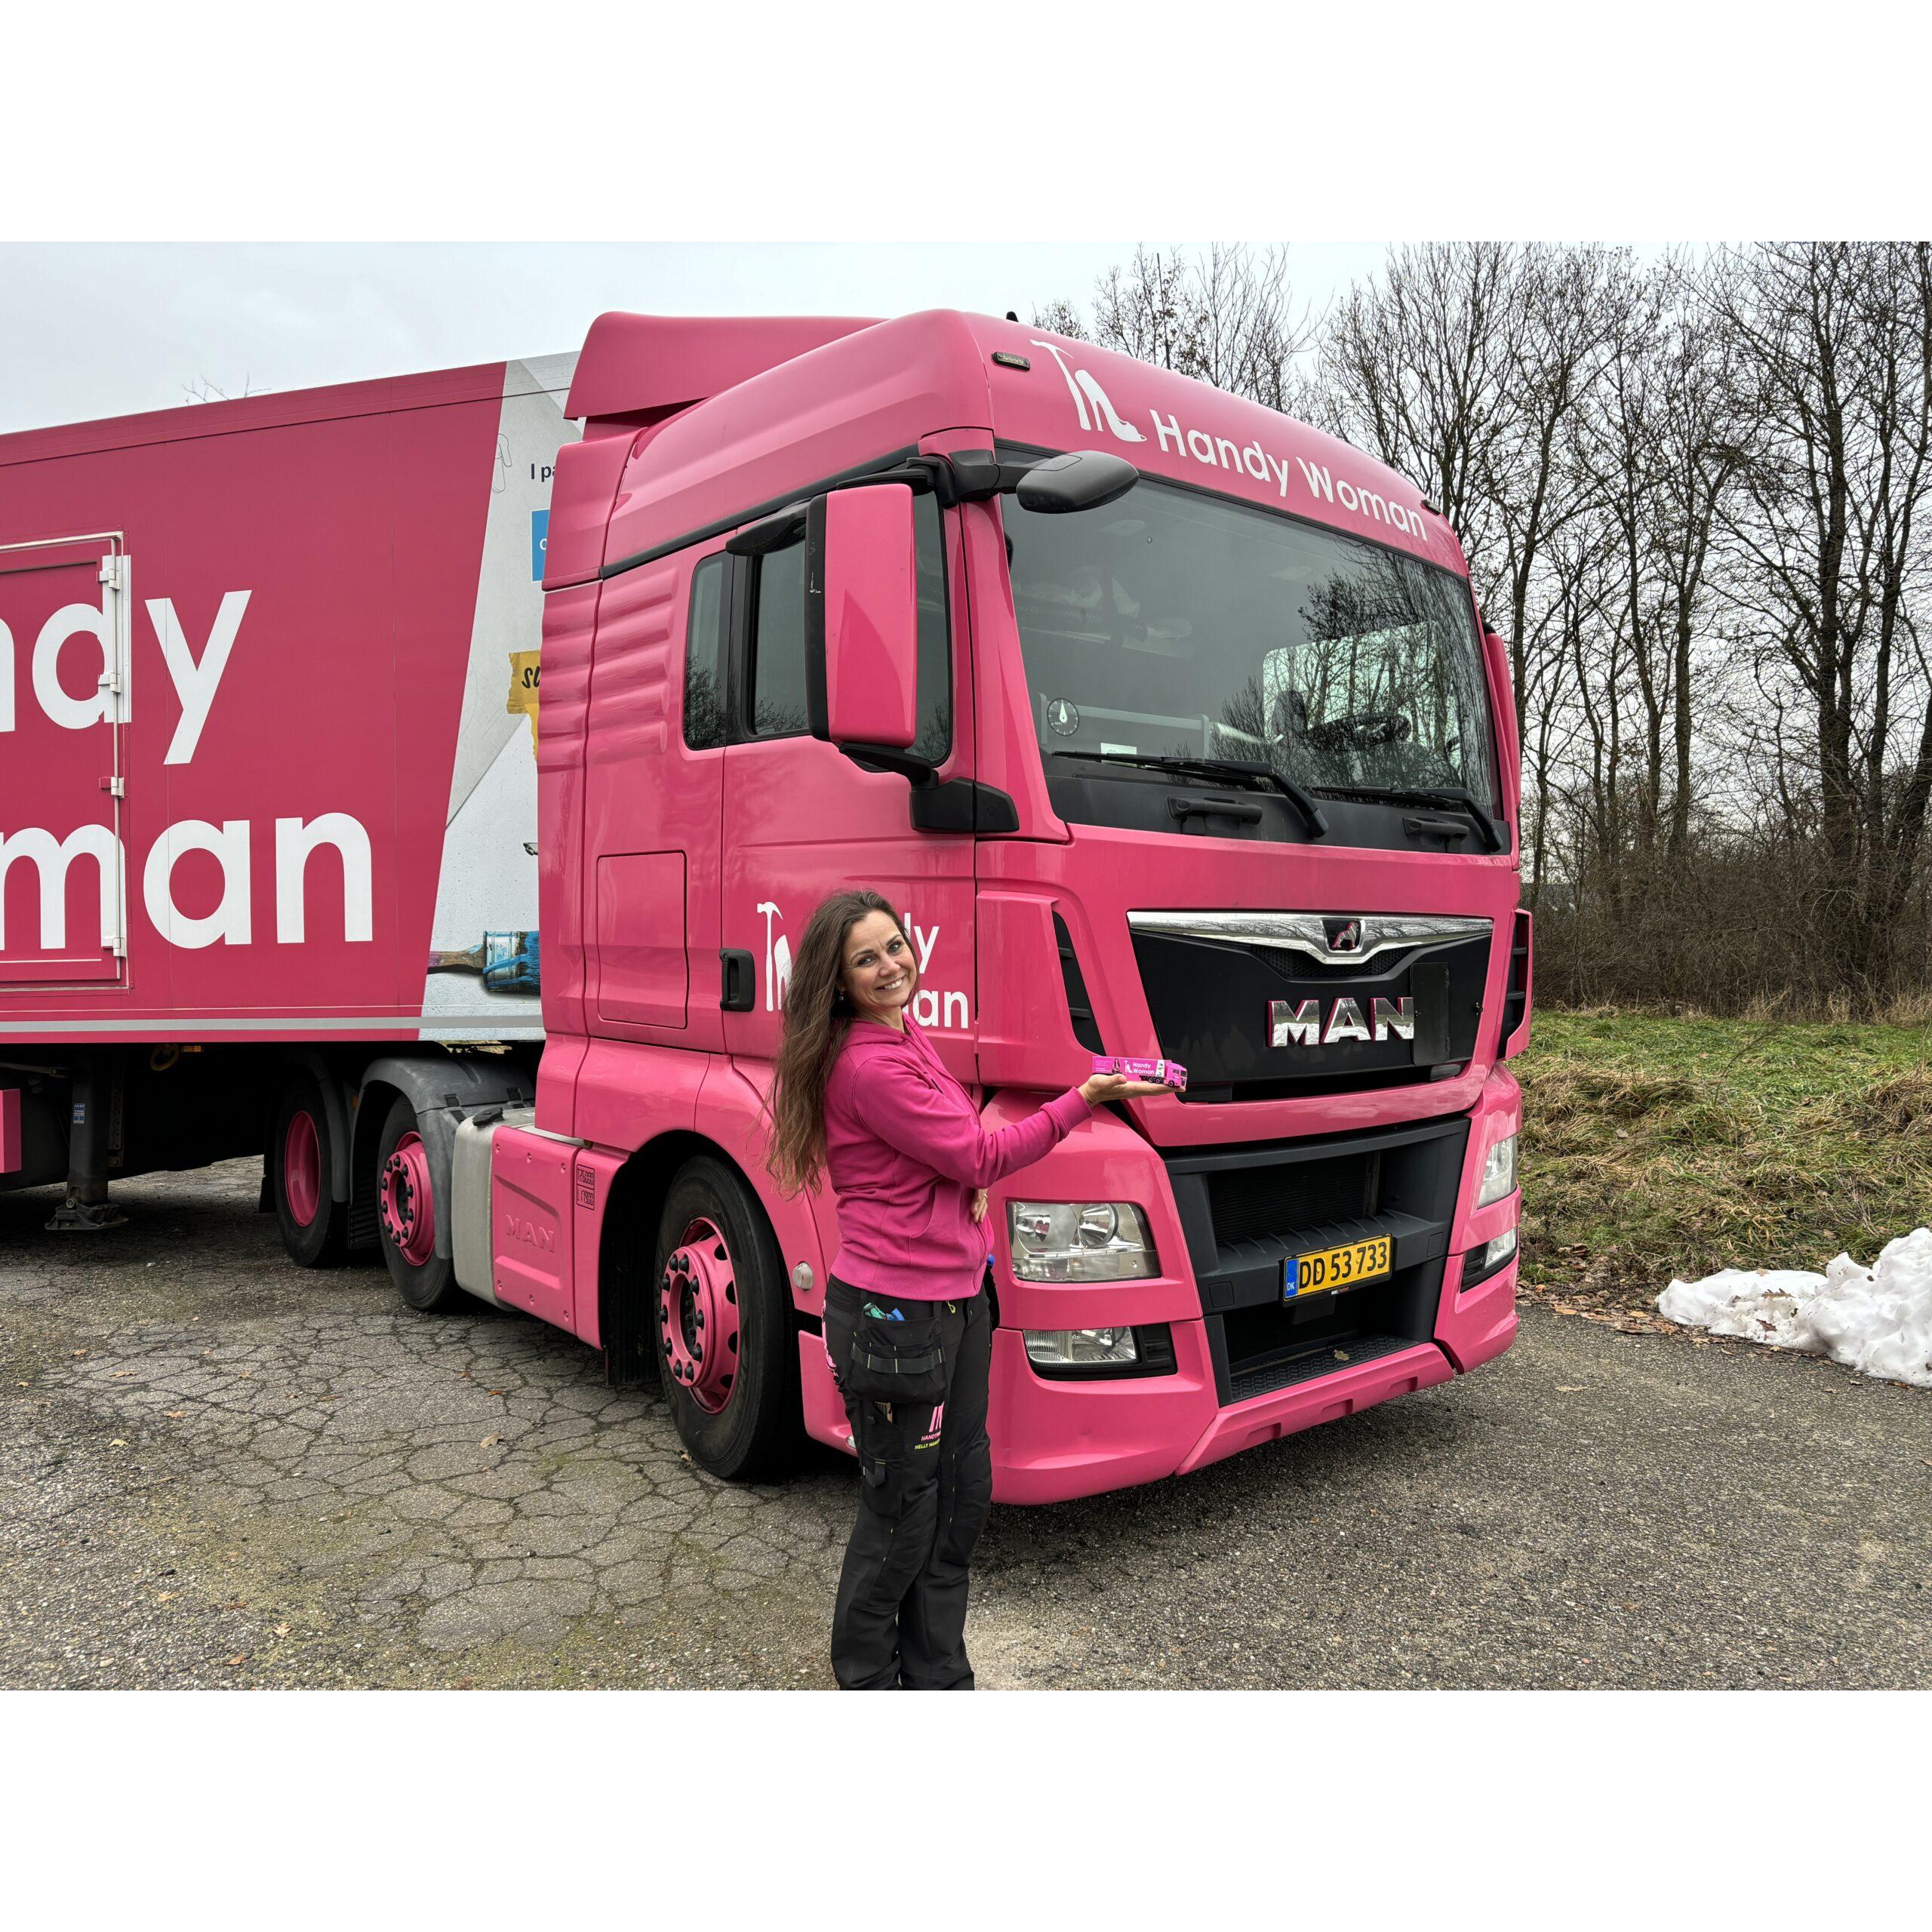 handywoman_truck_pink